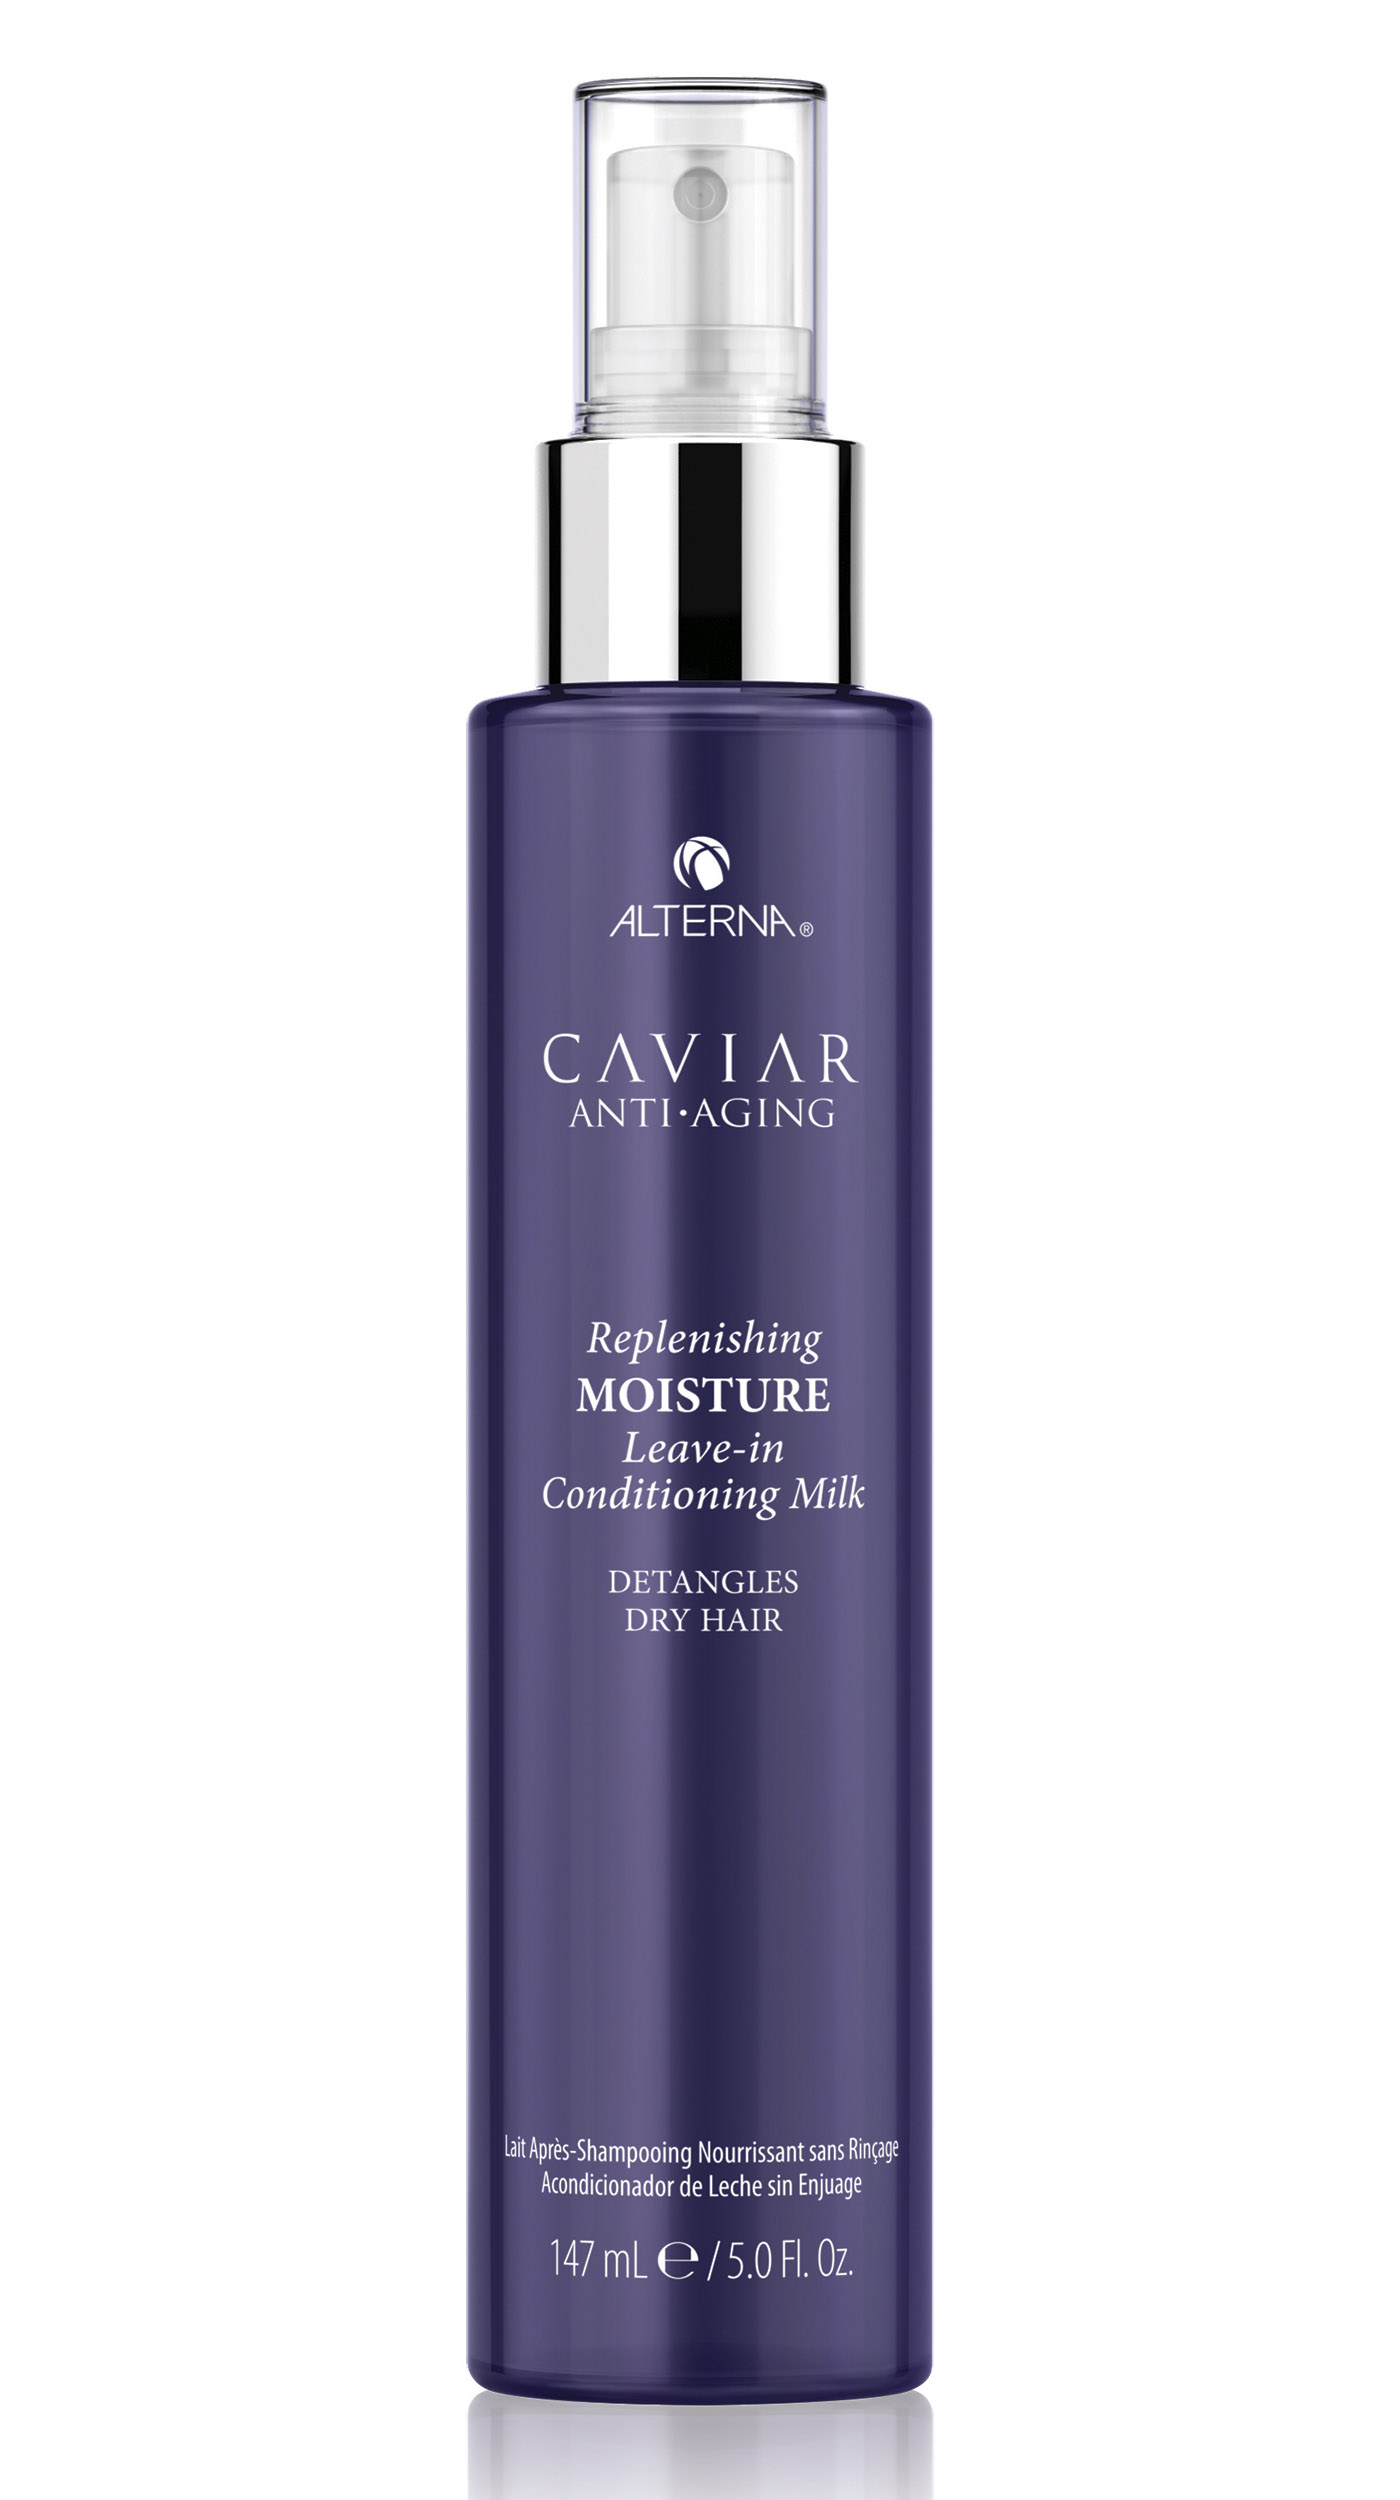 Alterna Несмываемое молочко-кондиционер для интенсивной биоревитализации волос Caviar Anti-Aging Replenishing Leave-in Conditioning Milk, 147 мл (Alterna, Replenishing Moisture)